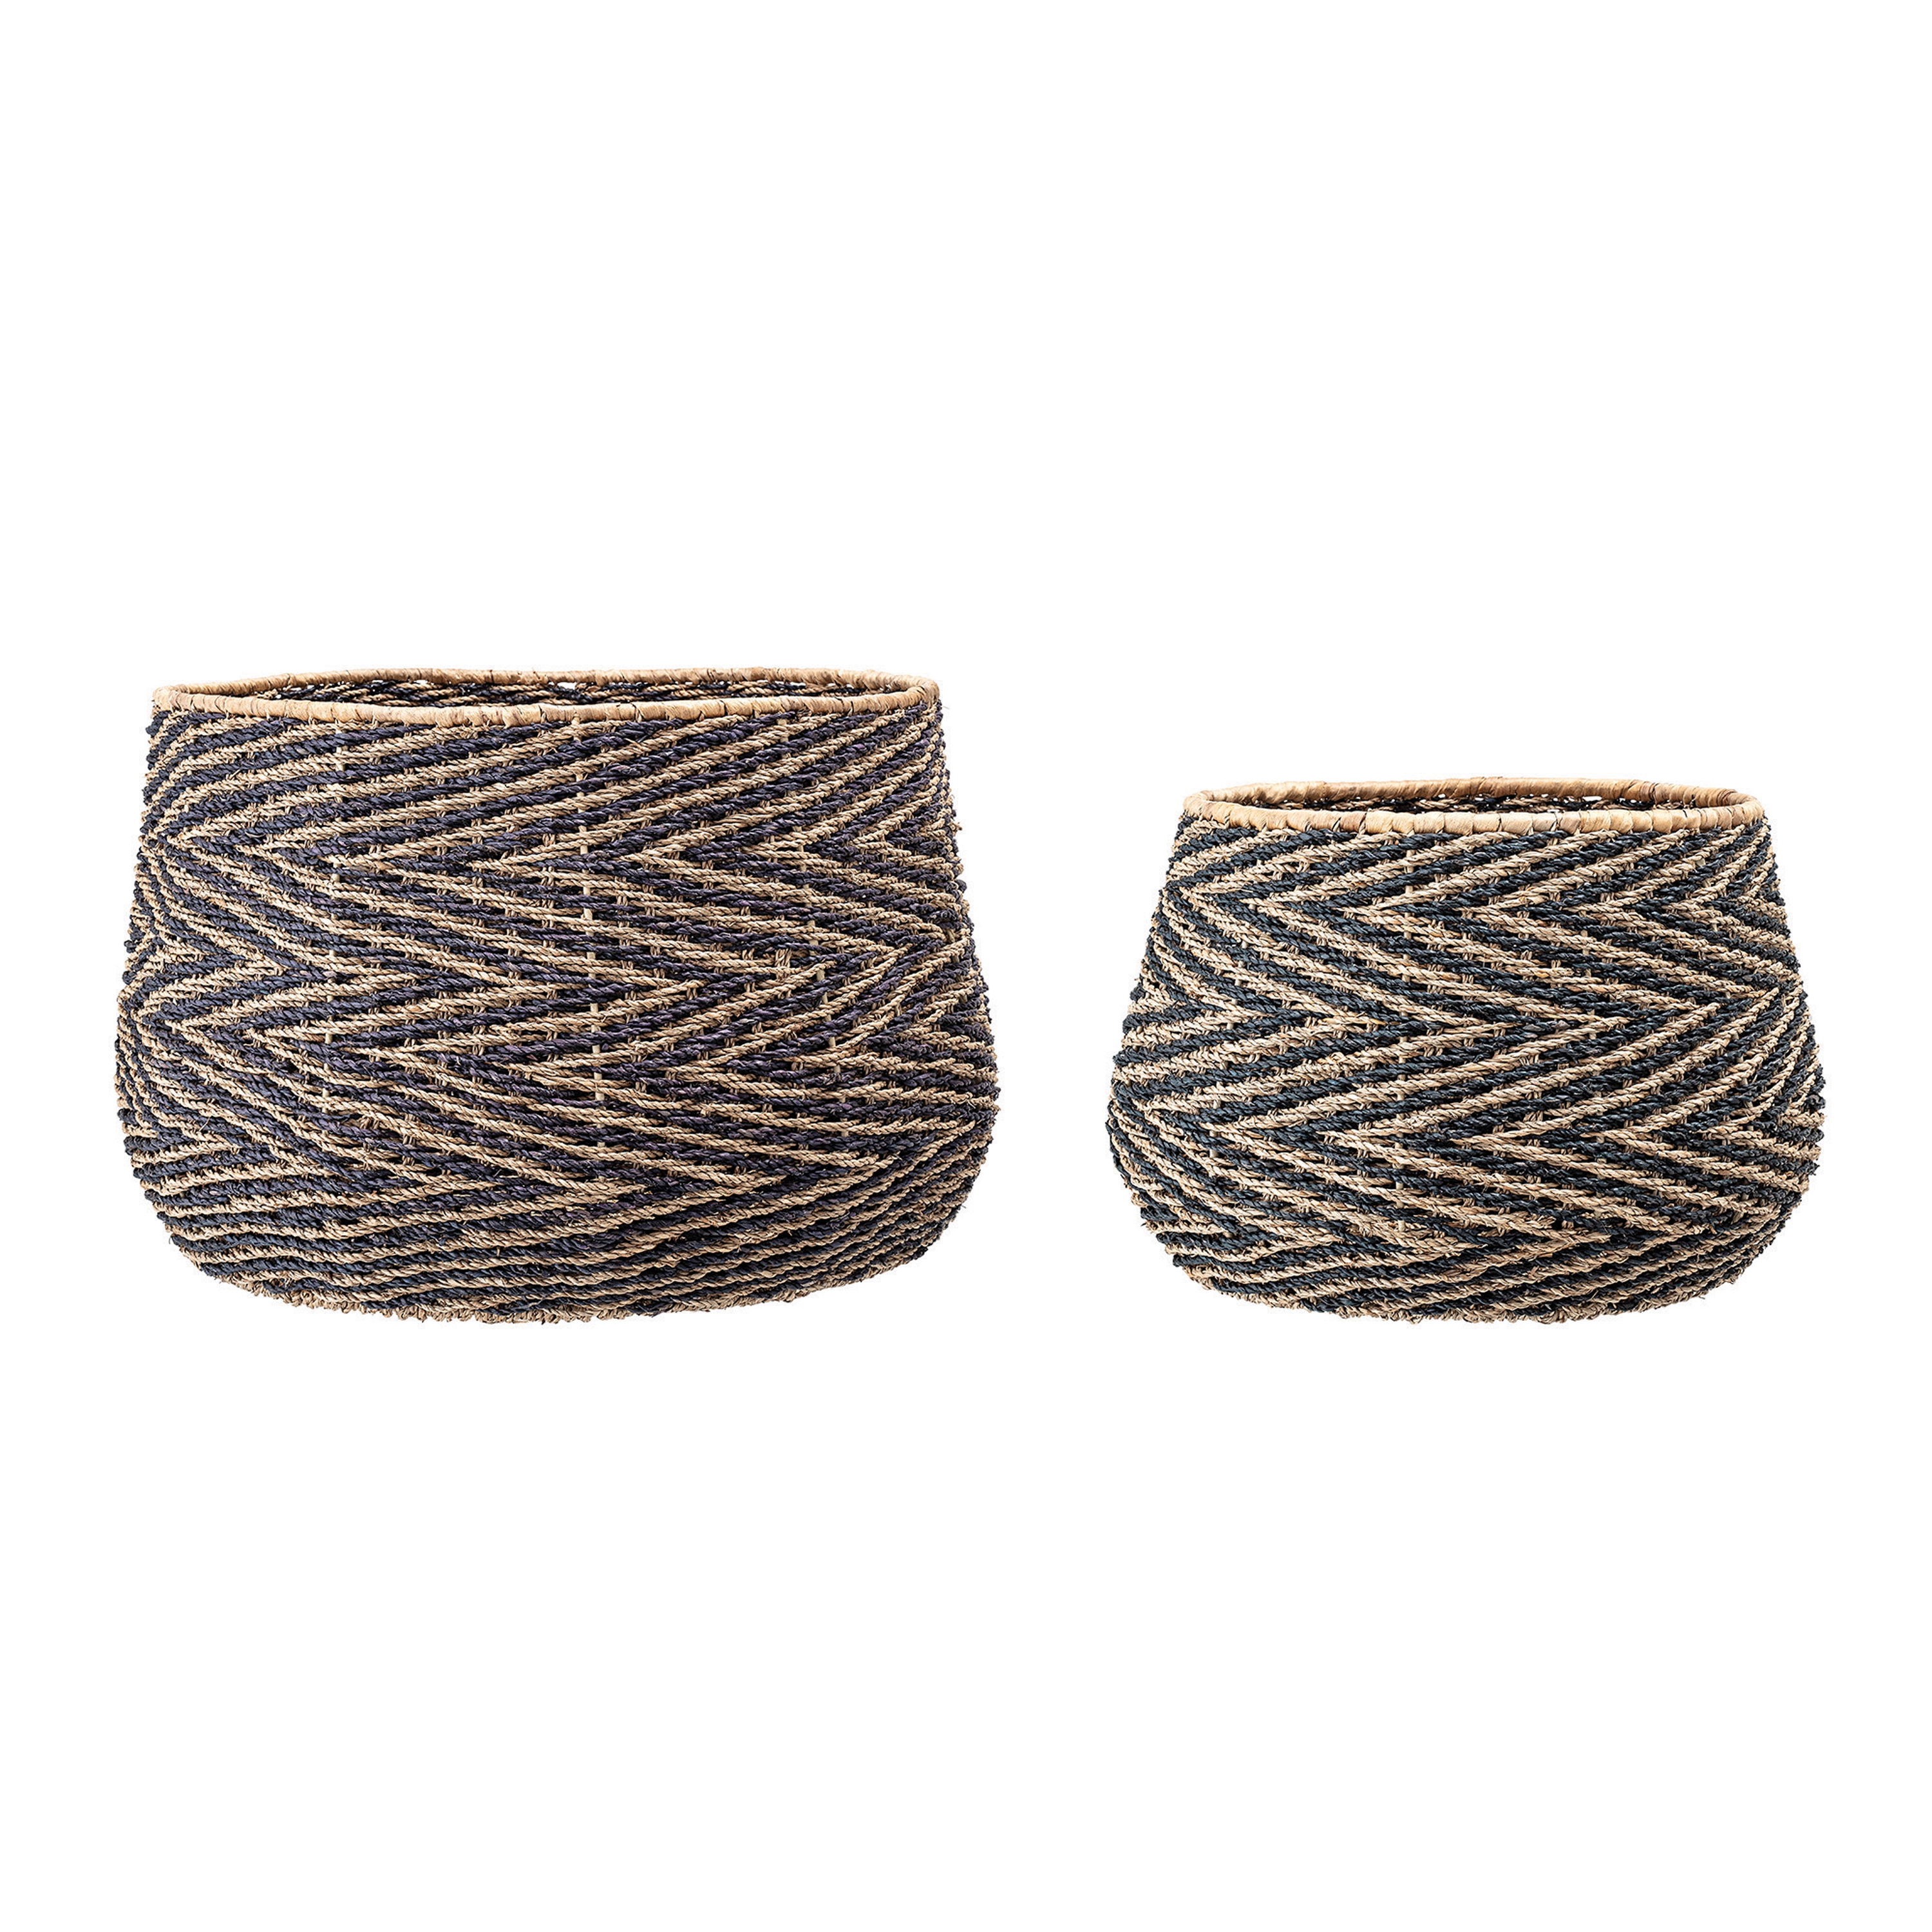 Handwoven Chevron Seagrass Baskets, Black & Natural, Set of 2 - Image 0